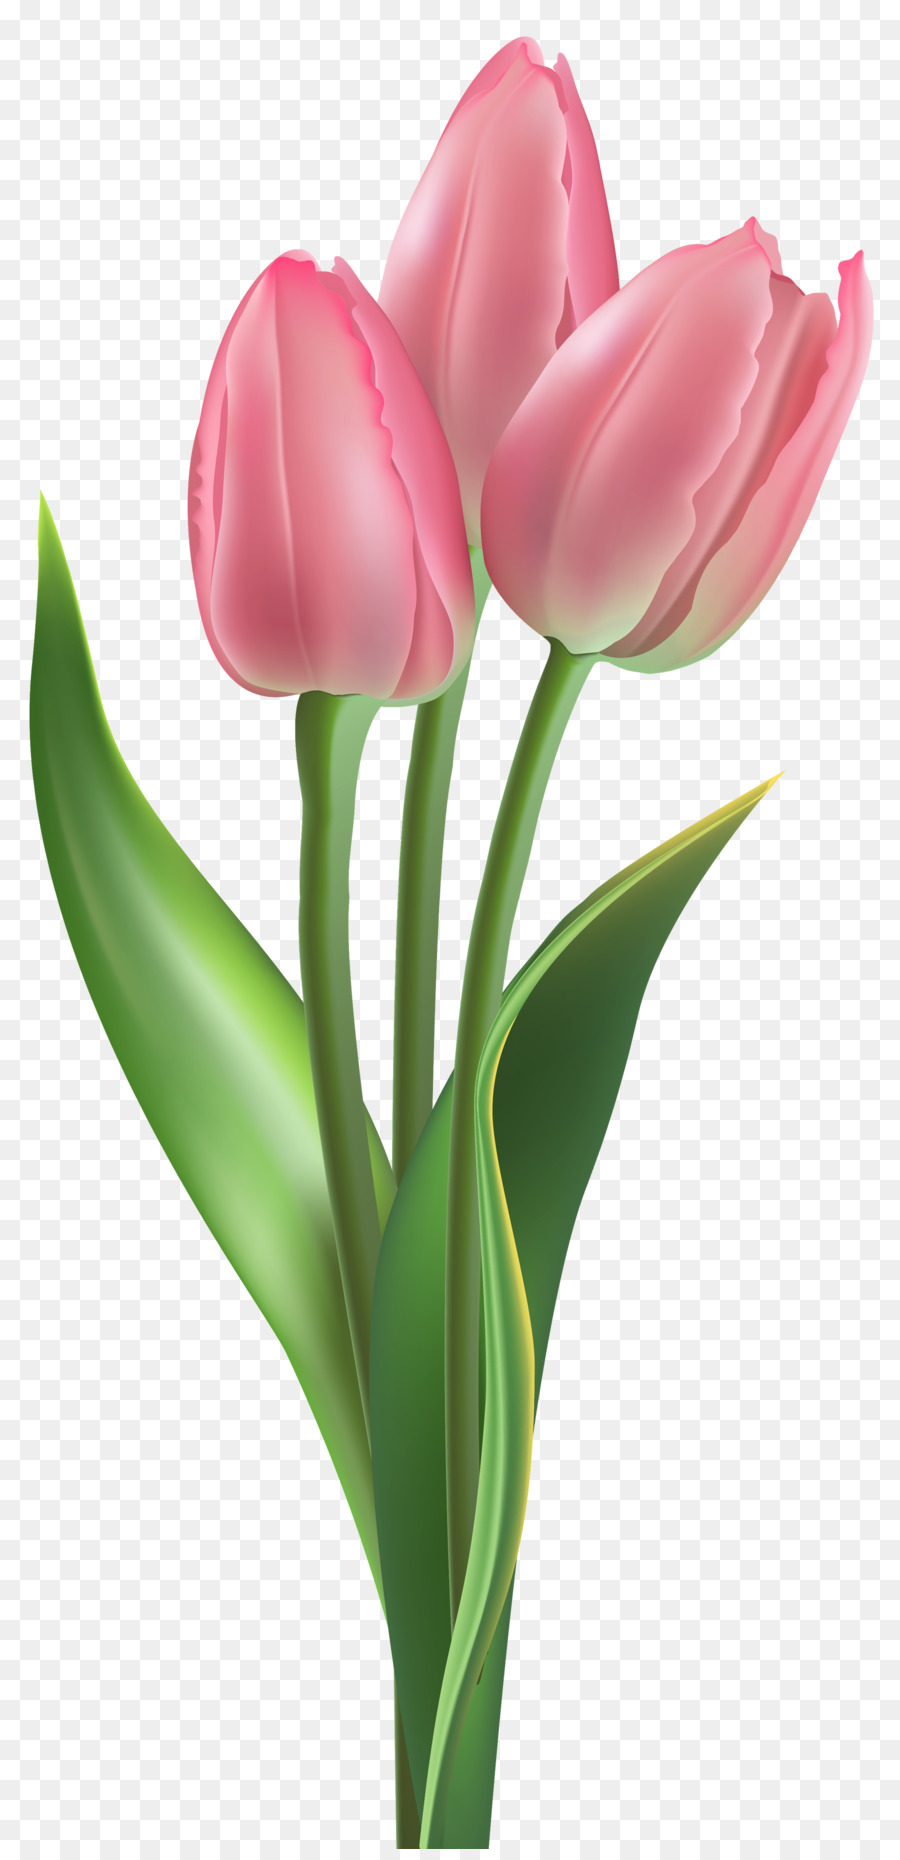 Tulip Flower Clip art - tulip png download - 1800*3697 - Free Transparent Tulip png Download.